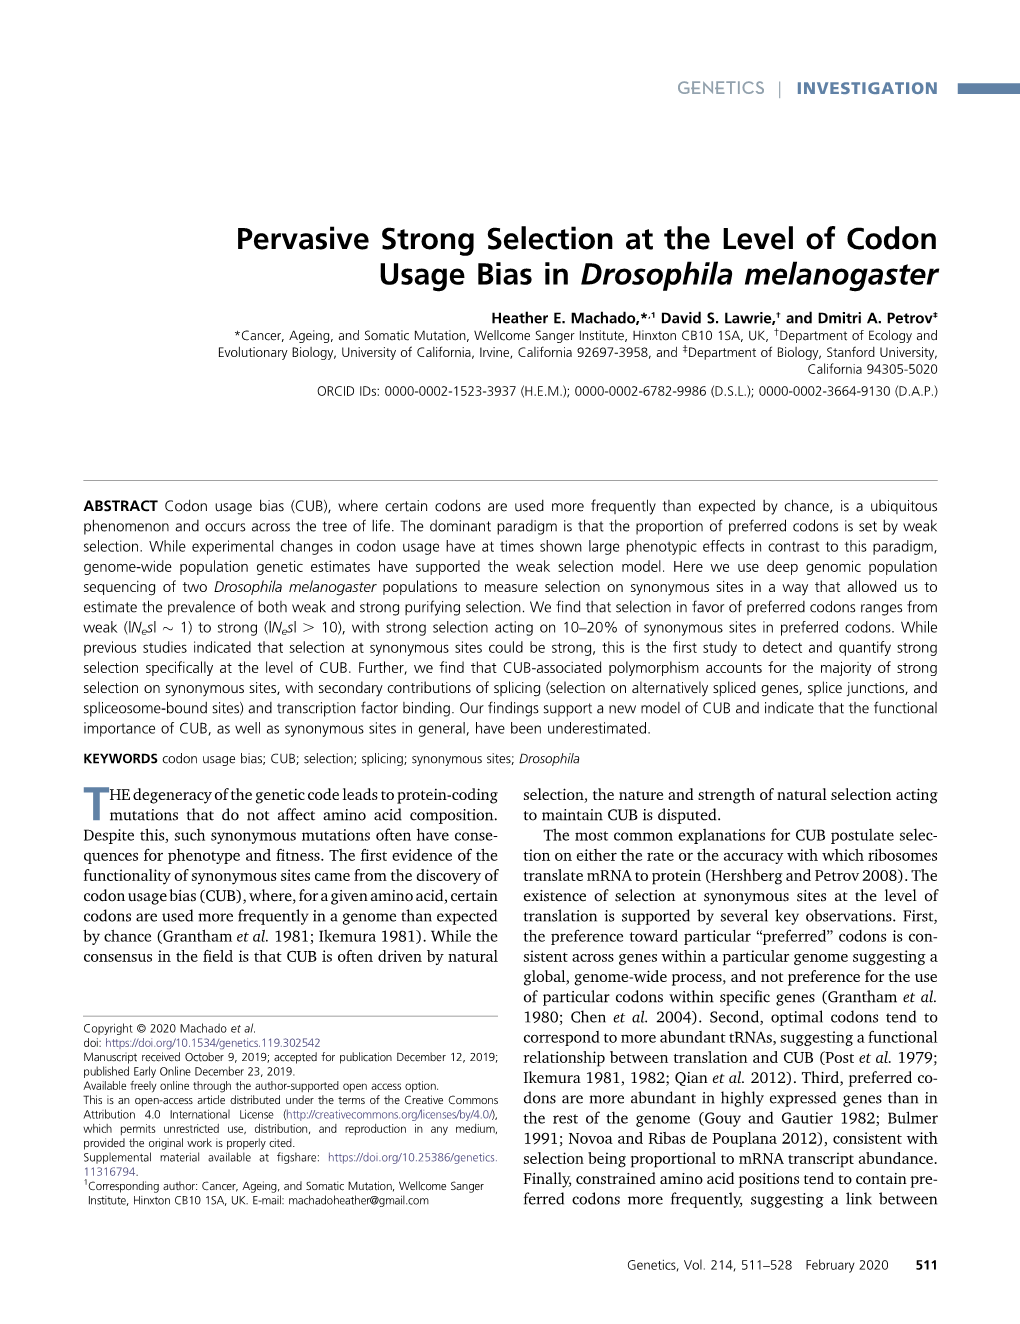 Pervasive Strong Selection at the Level of Codon Usage Bias in Drosophila Melanogaster